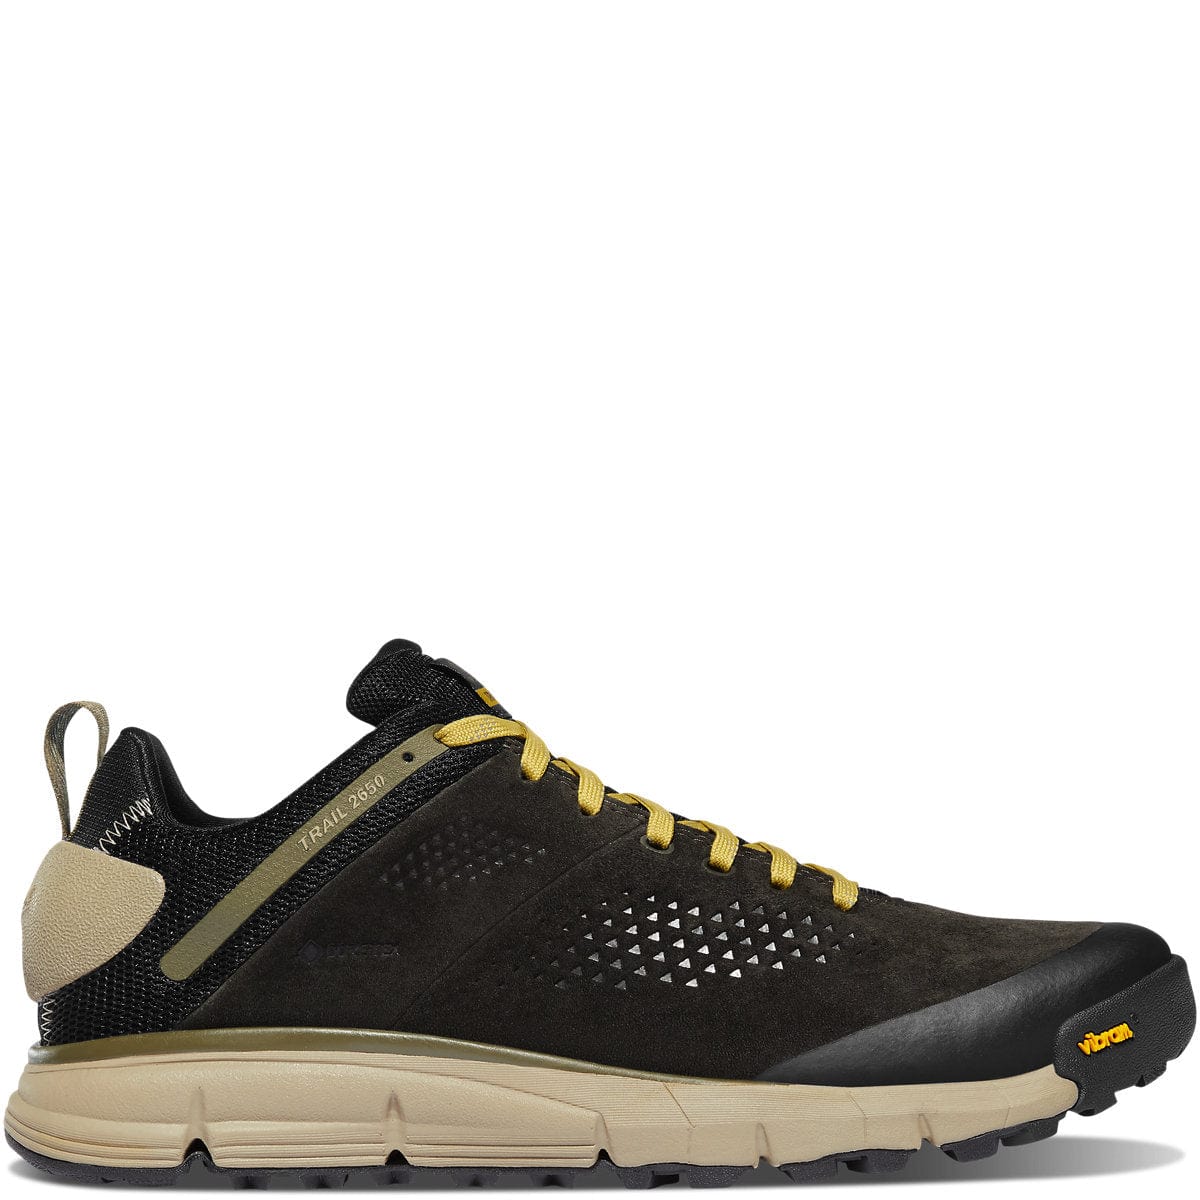 Danner Danner Mens Trail 2650 3" GTX Hiking Shoe Black Olive/Flax Yellow / 7 / D Footwear